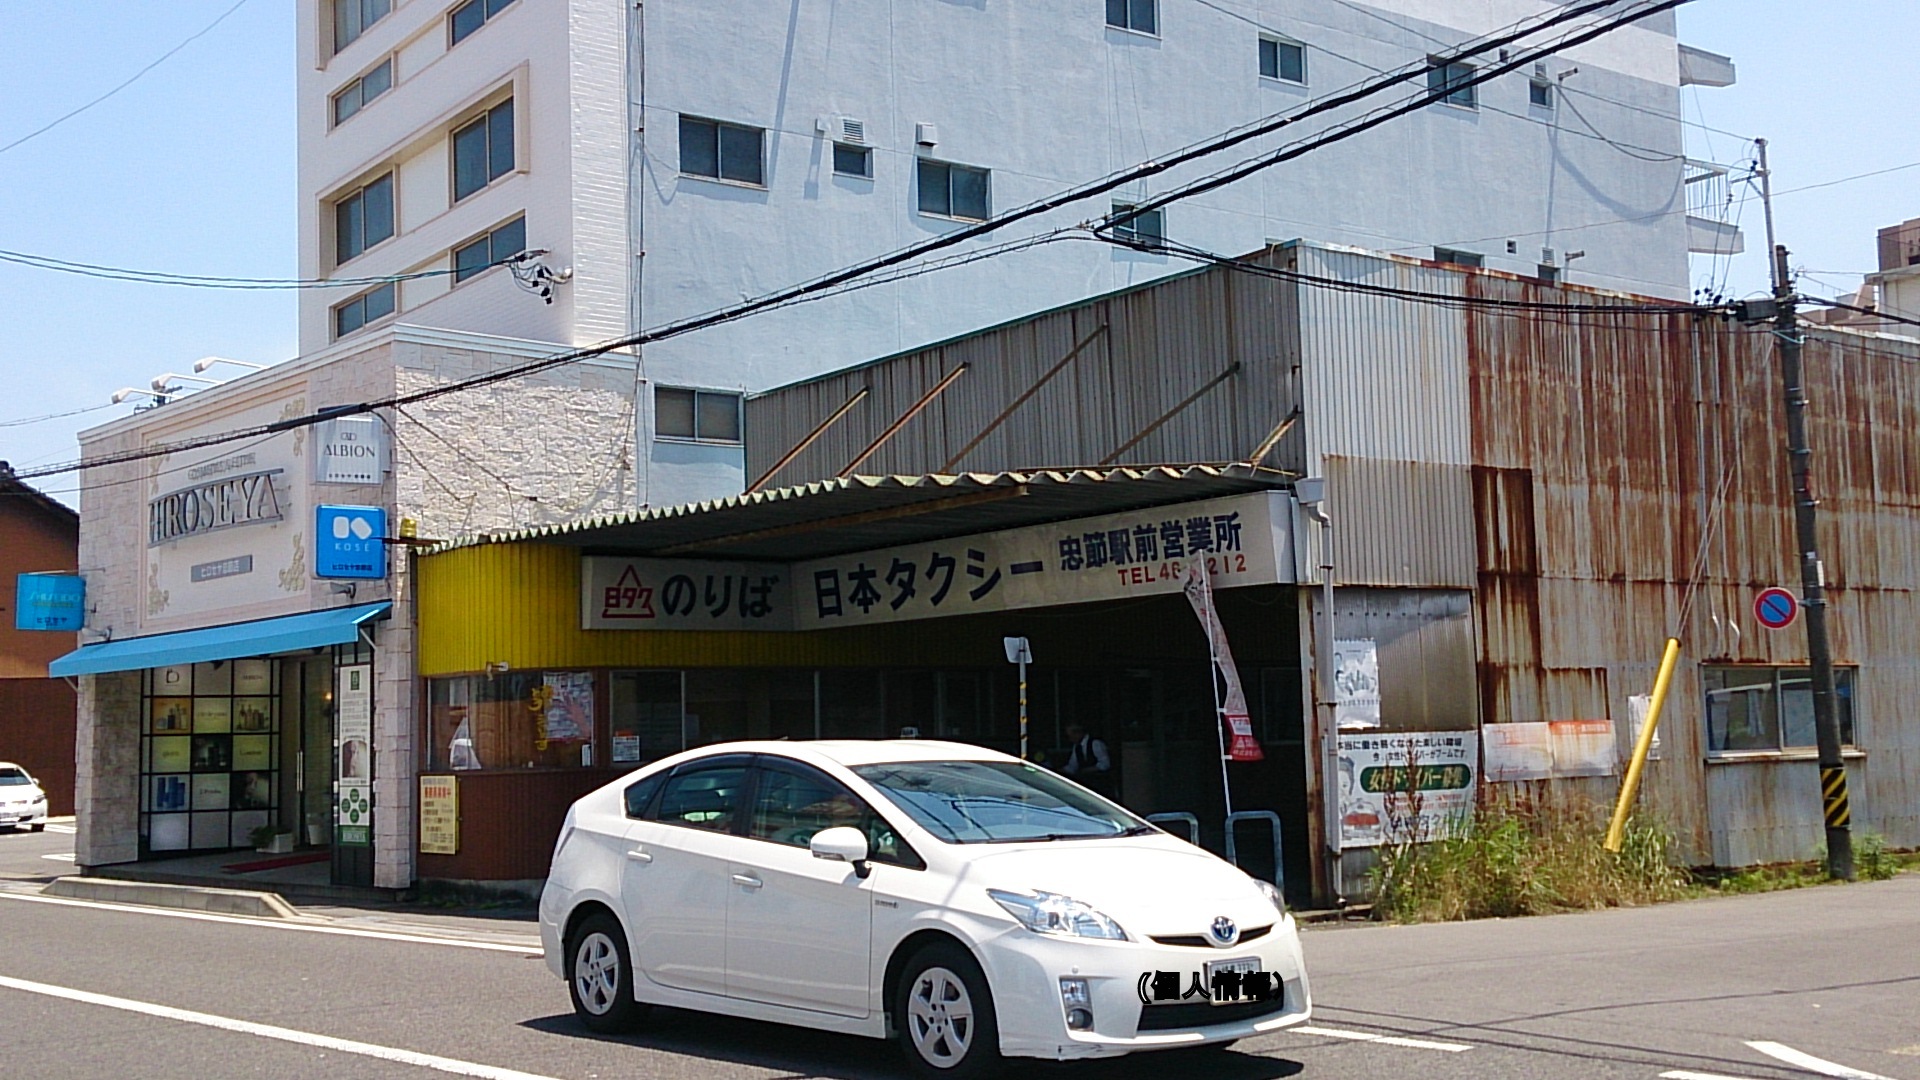 File 日本タクシー 忠節駅前営業所 個人自動車ナンバー消しの修正版 Jpg Wikimedia Commons